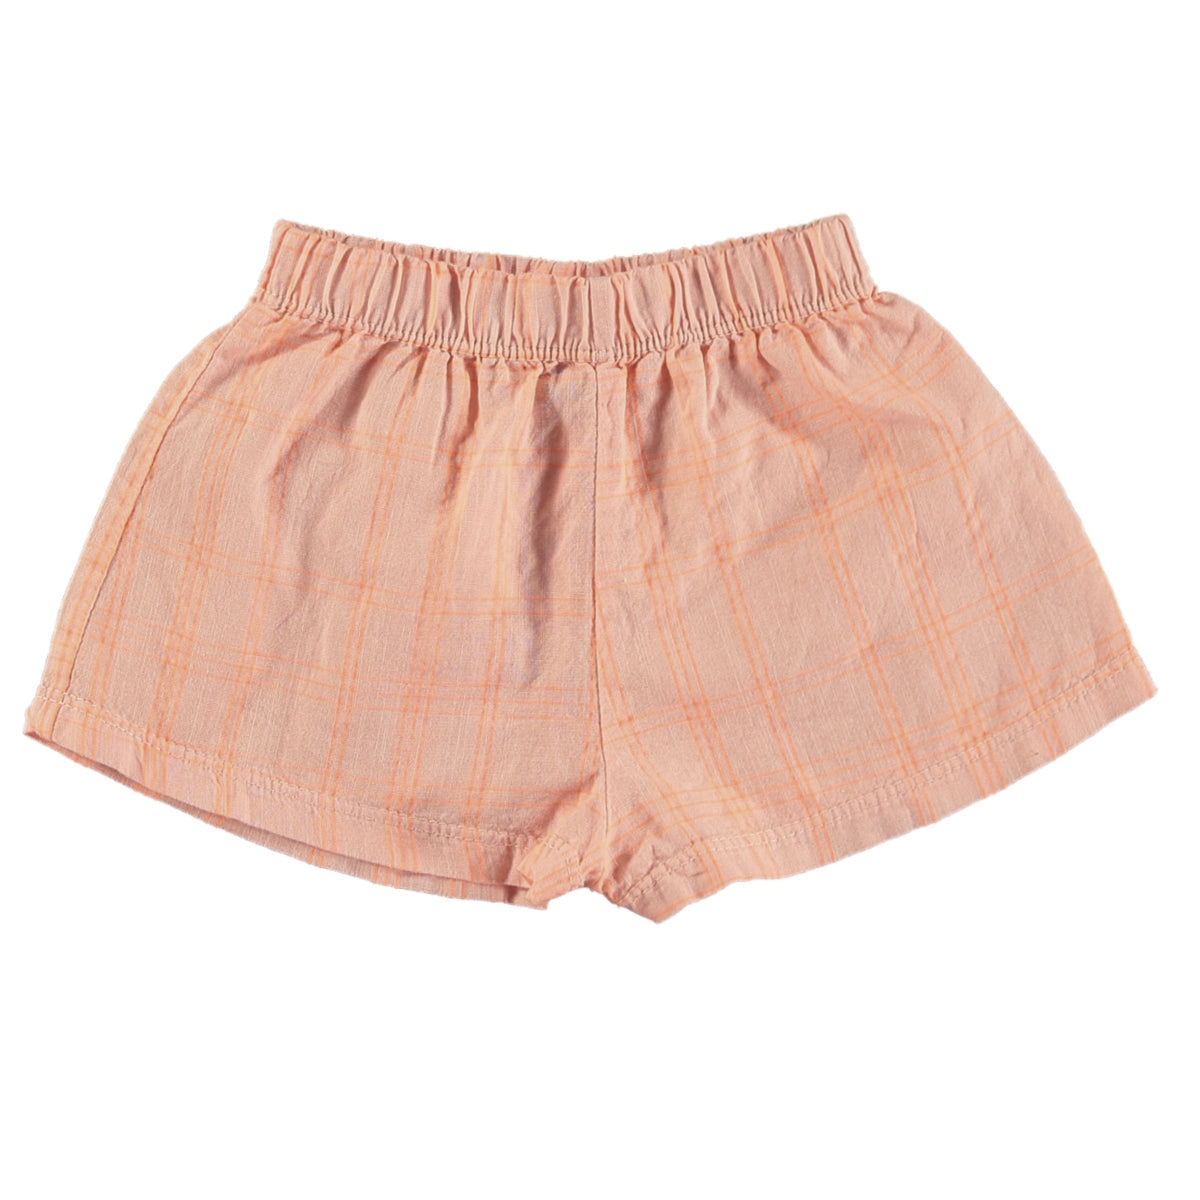 Lotie Kids - baby woven shorts - checks - salmon rose